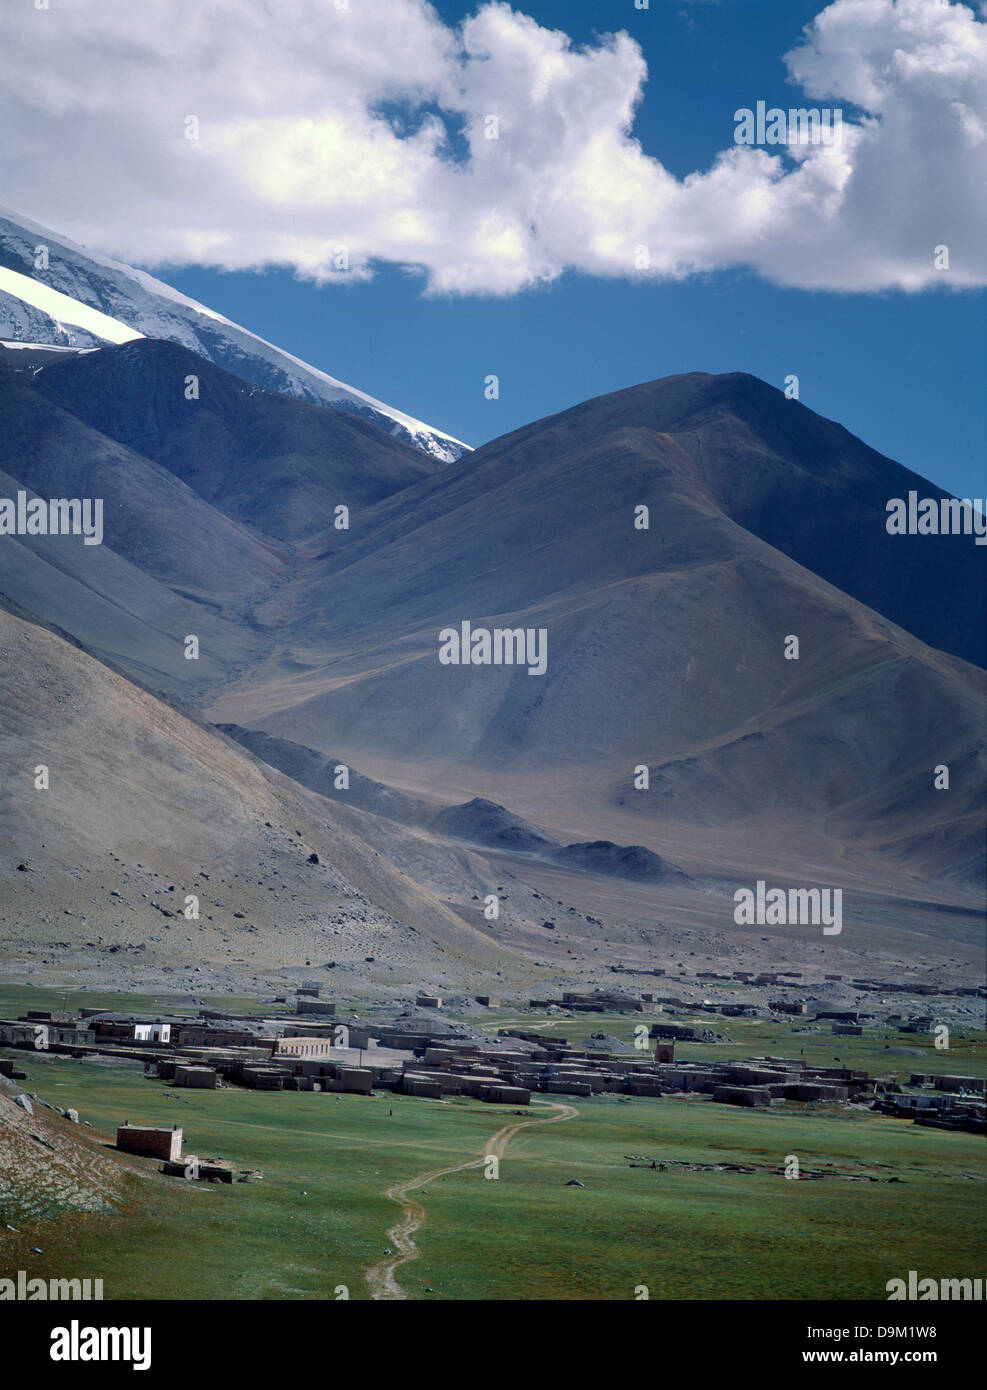 Villaggio del Kirghizistan piede di muztag ata mountain (7546m) vicino al lago karakul kyzylsu kirghisa paese autonomo nello Xinjiang cina Foto Stock